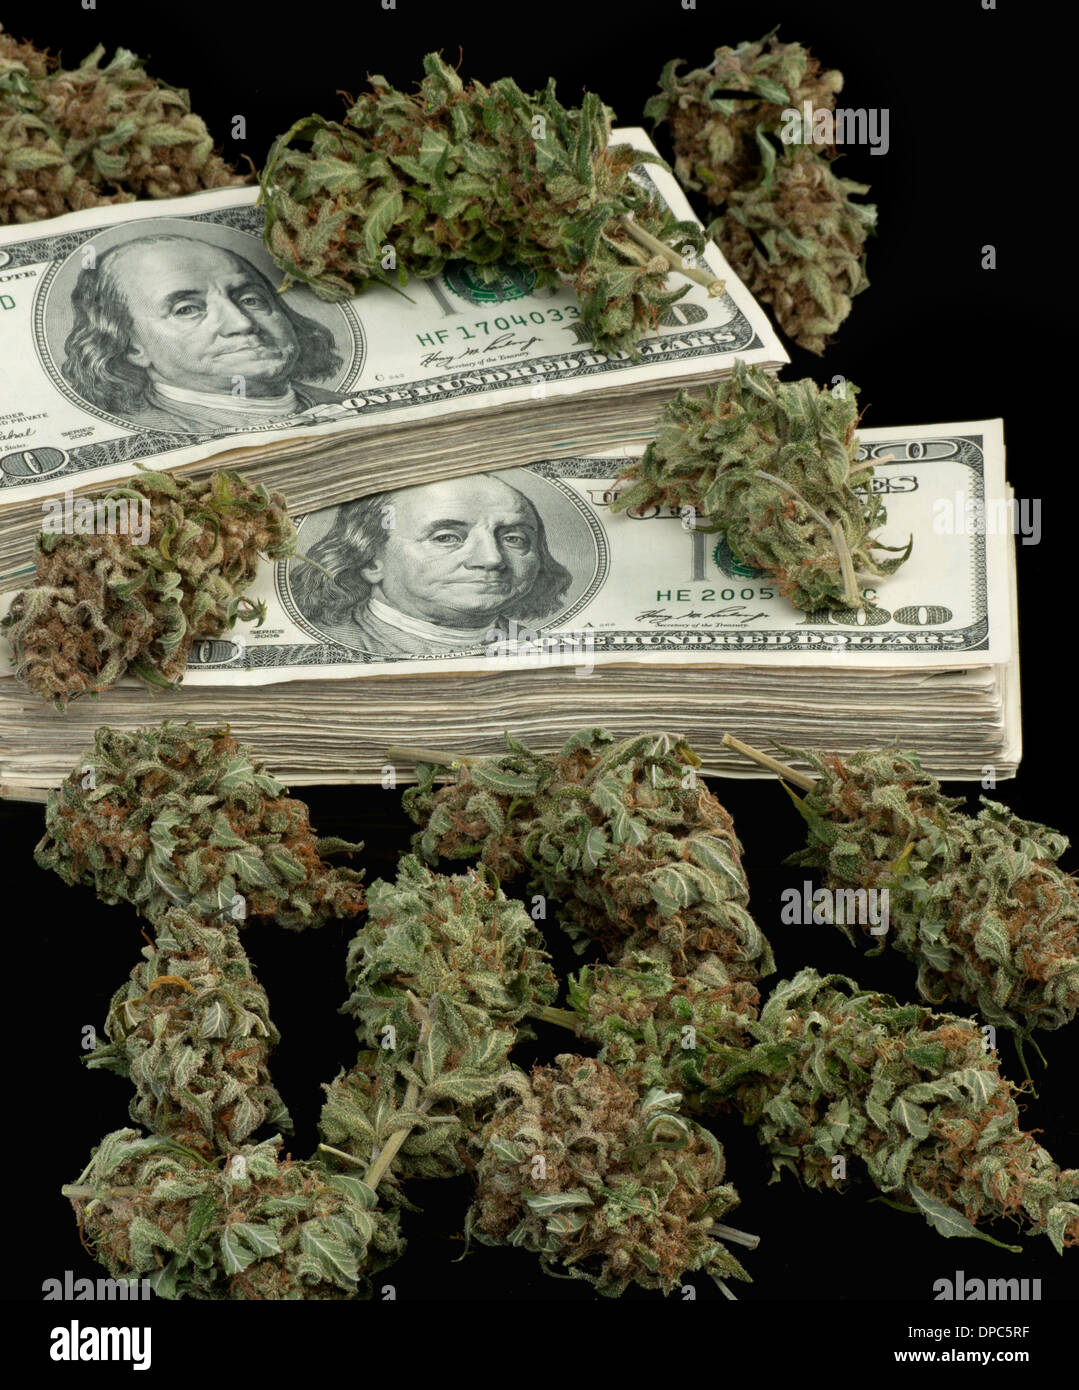 Marijuana market hi-res stock photography and images - Page 3 - Alamy